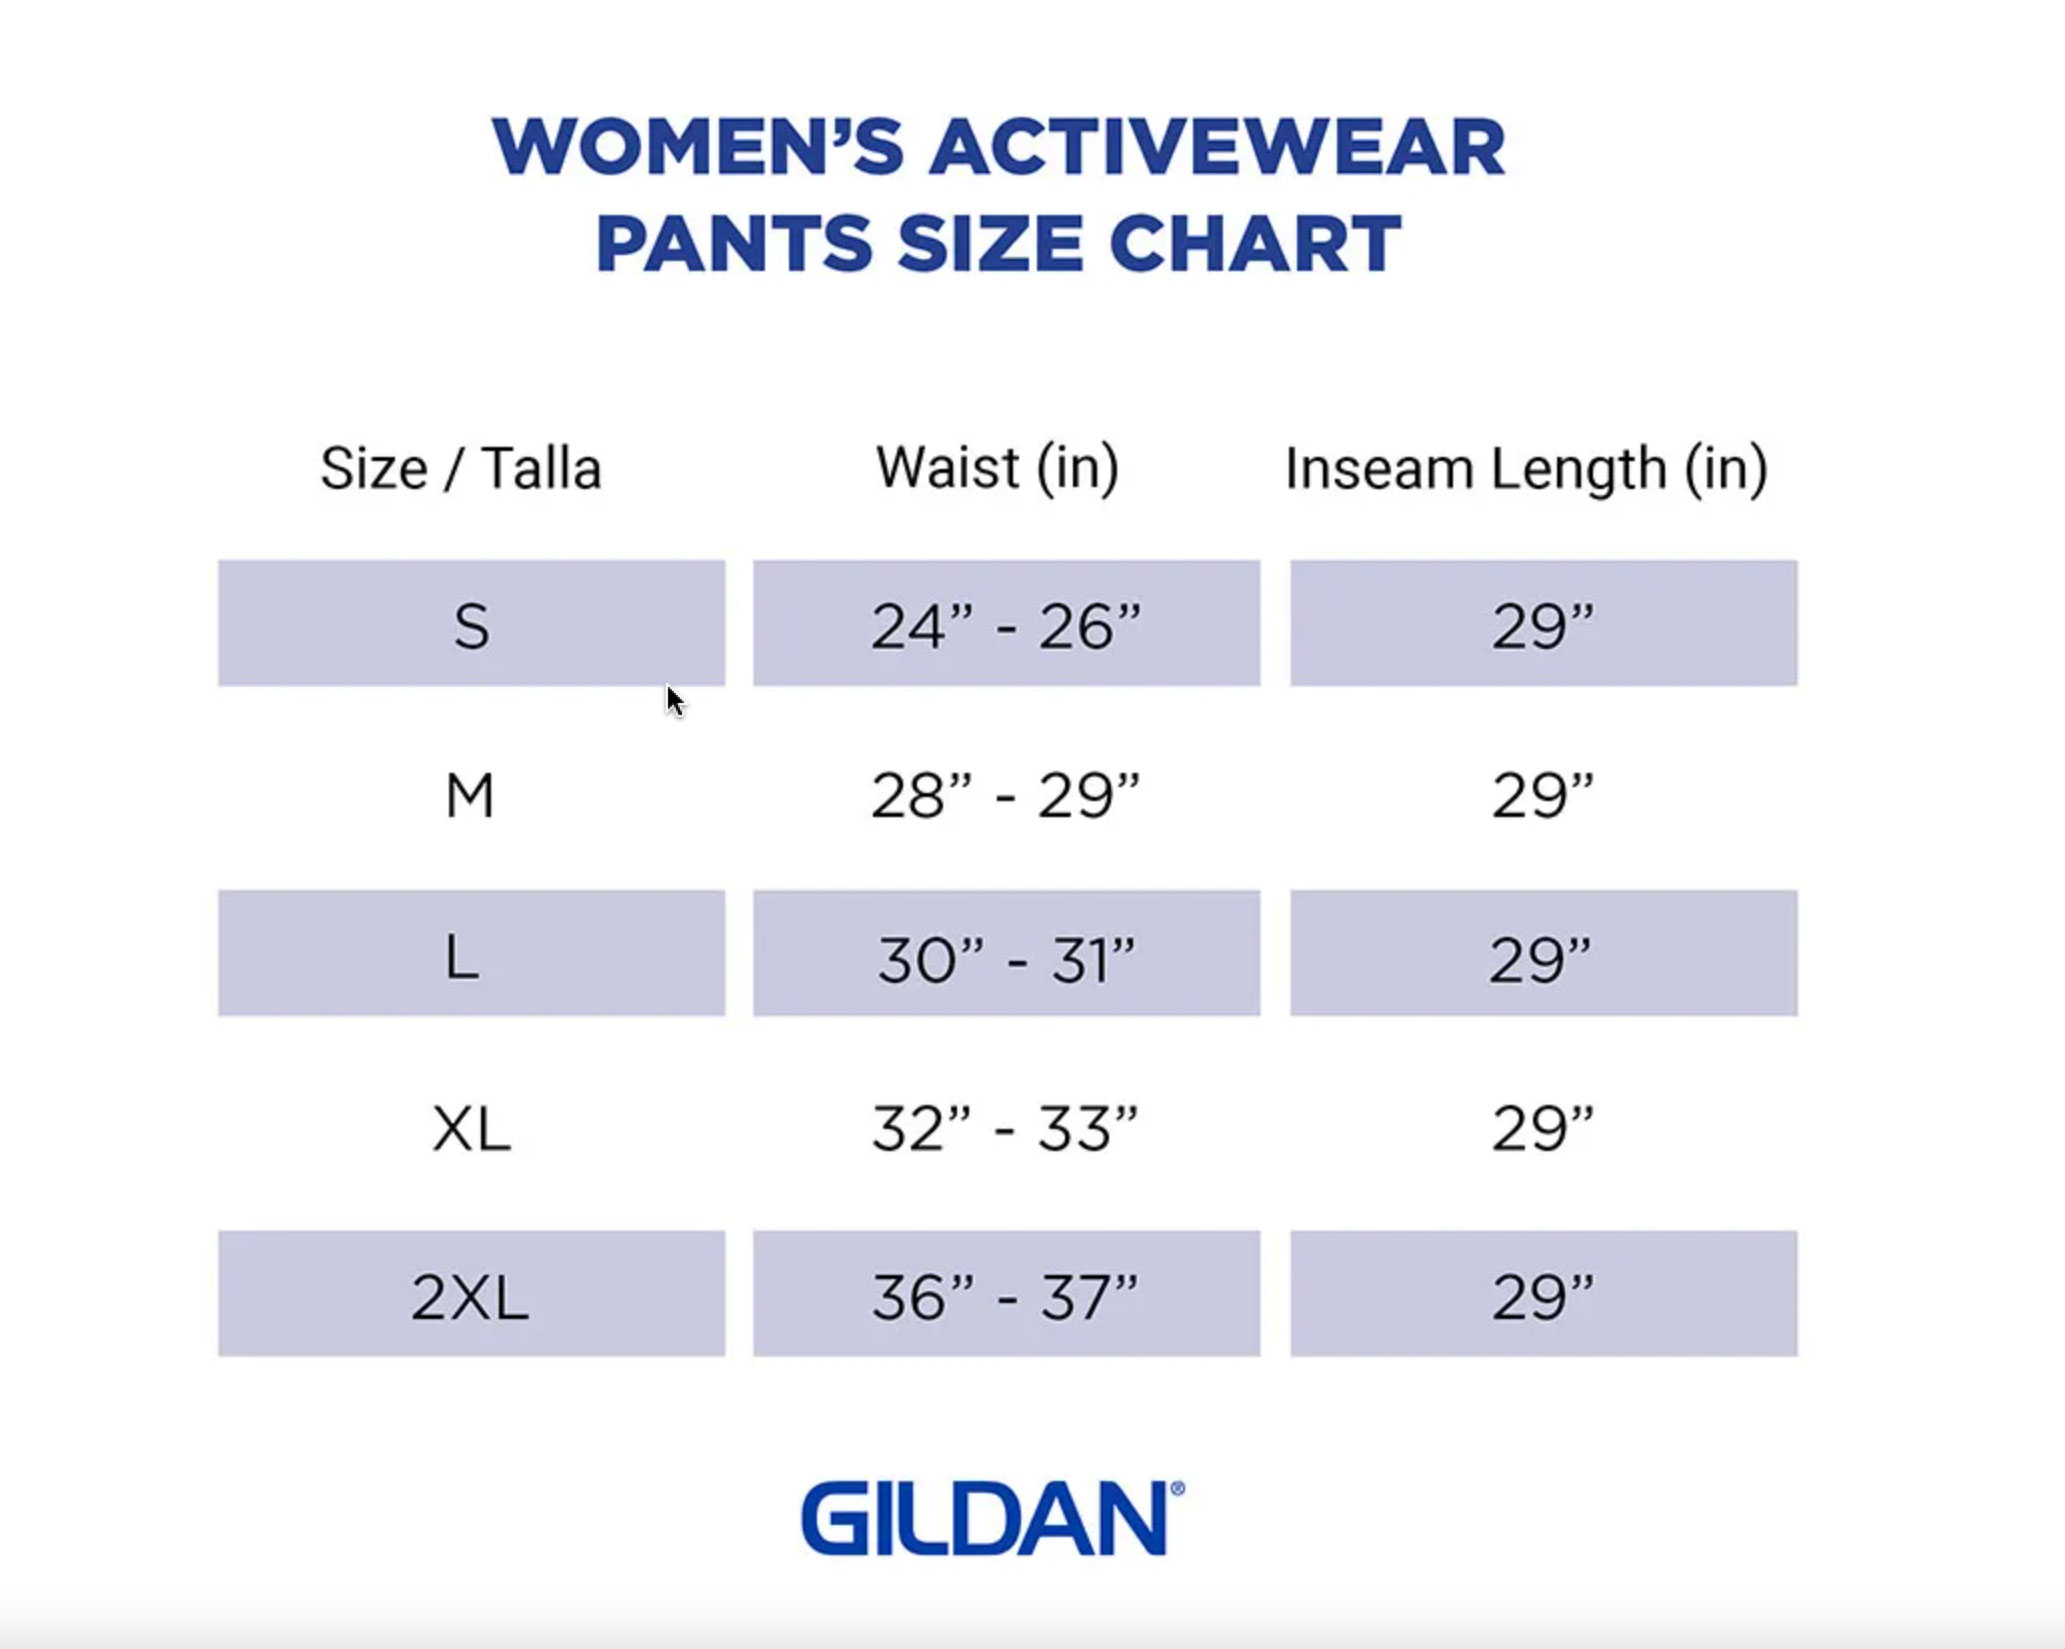 Gildan women's activewear pants size chart.